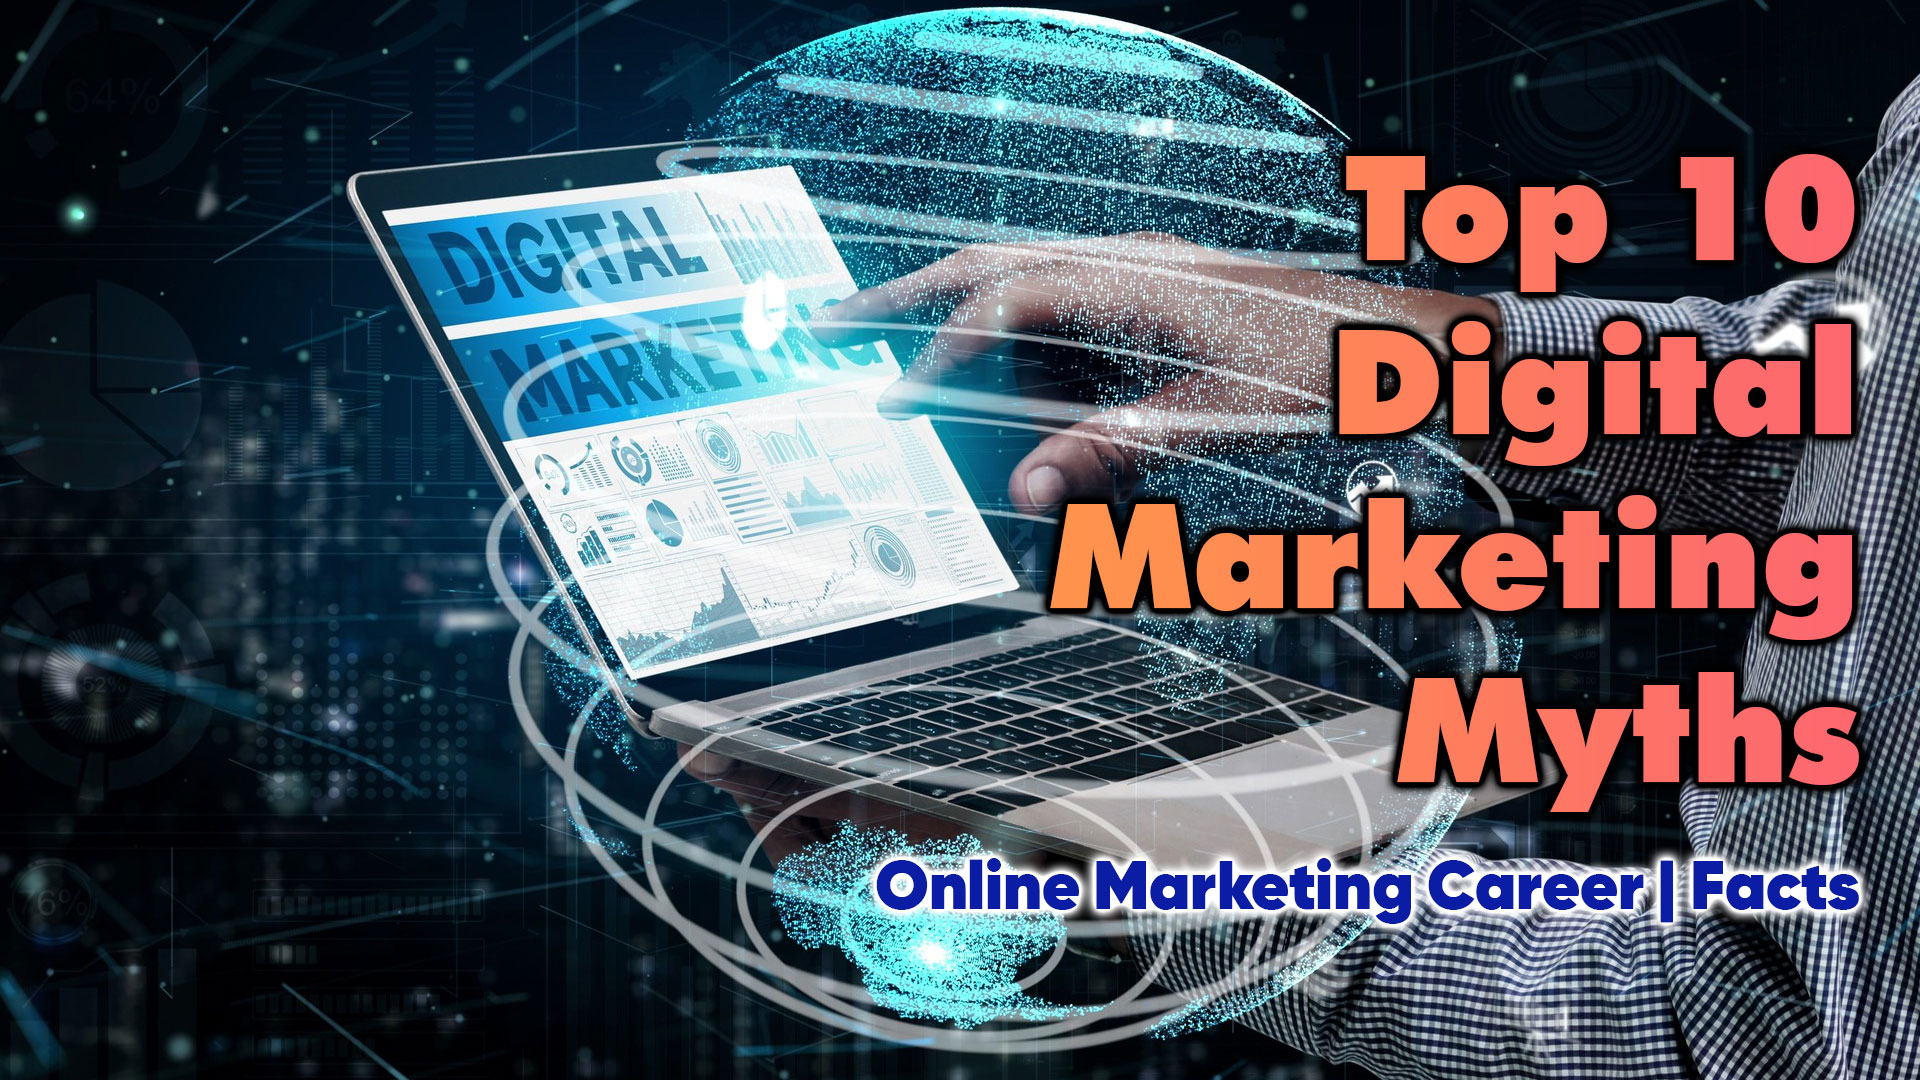 Top 10 Digital Marketing Myths Online Marketing Career Facts 1